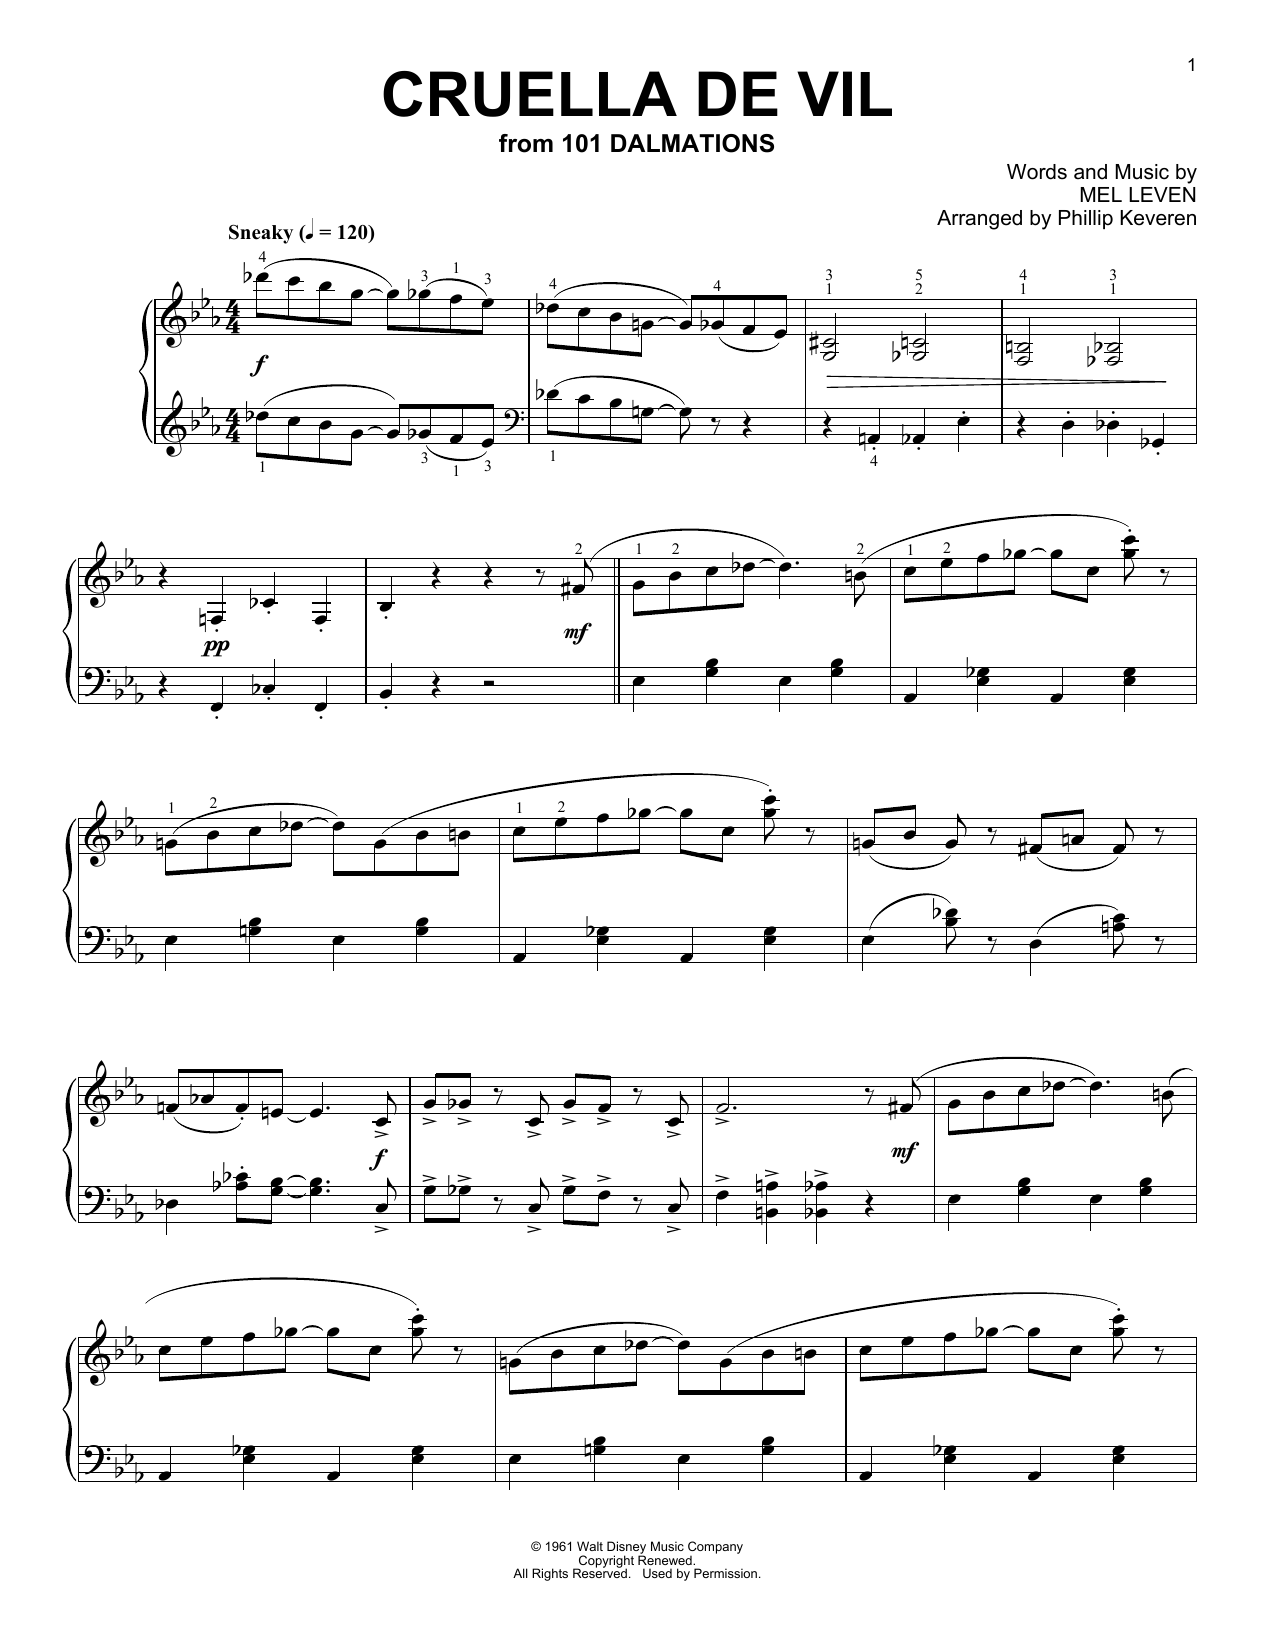 Mel Leven Cruella De Vil [Ragtime version] (arr. Phillip Keveren) Sheet Music Notes & Chords for Piano - Download or Print PDF